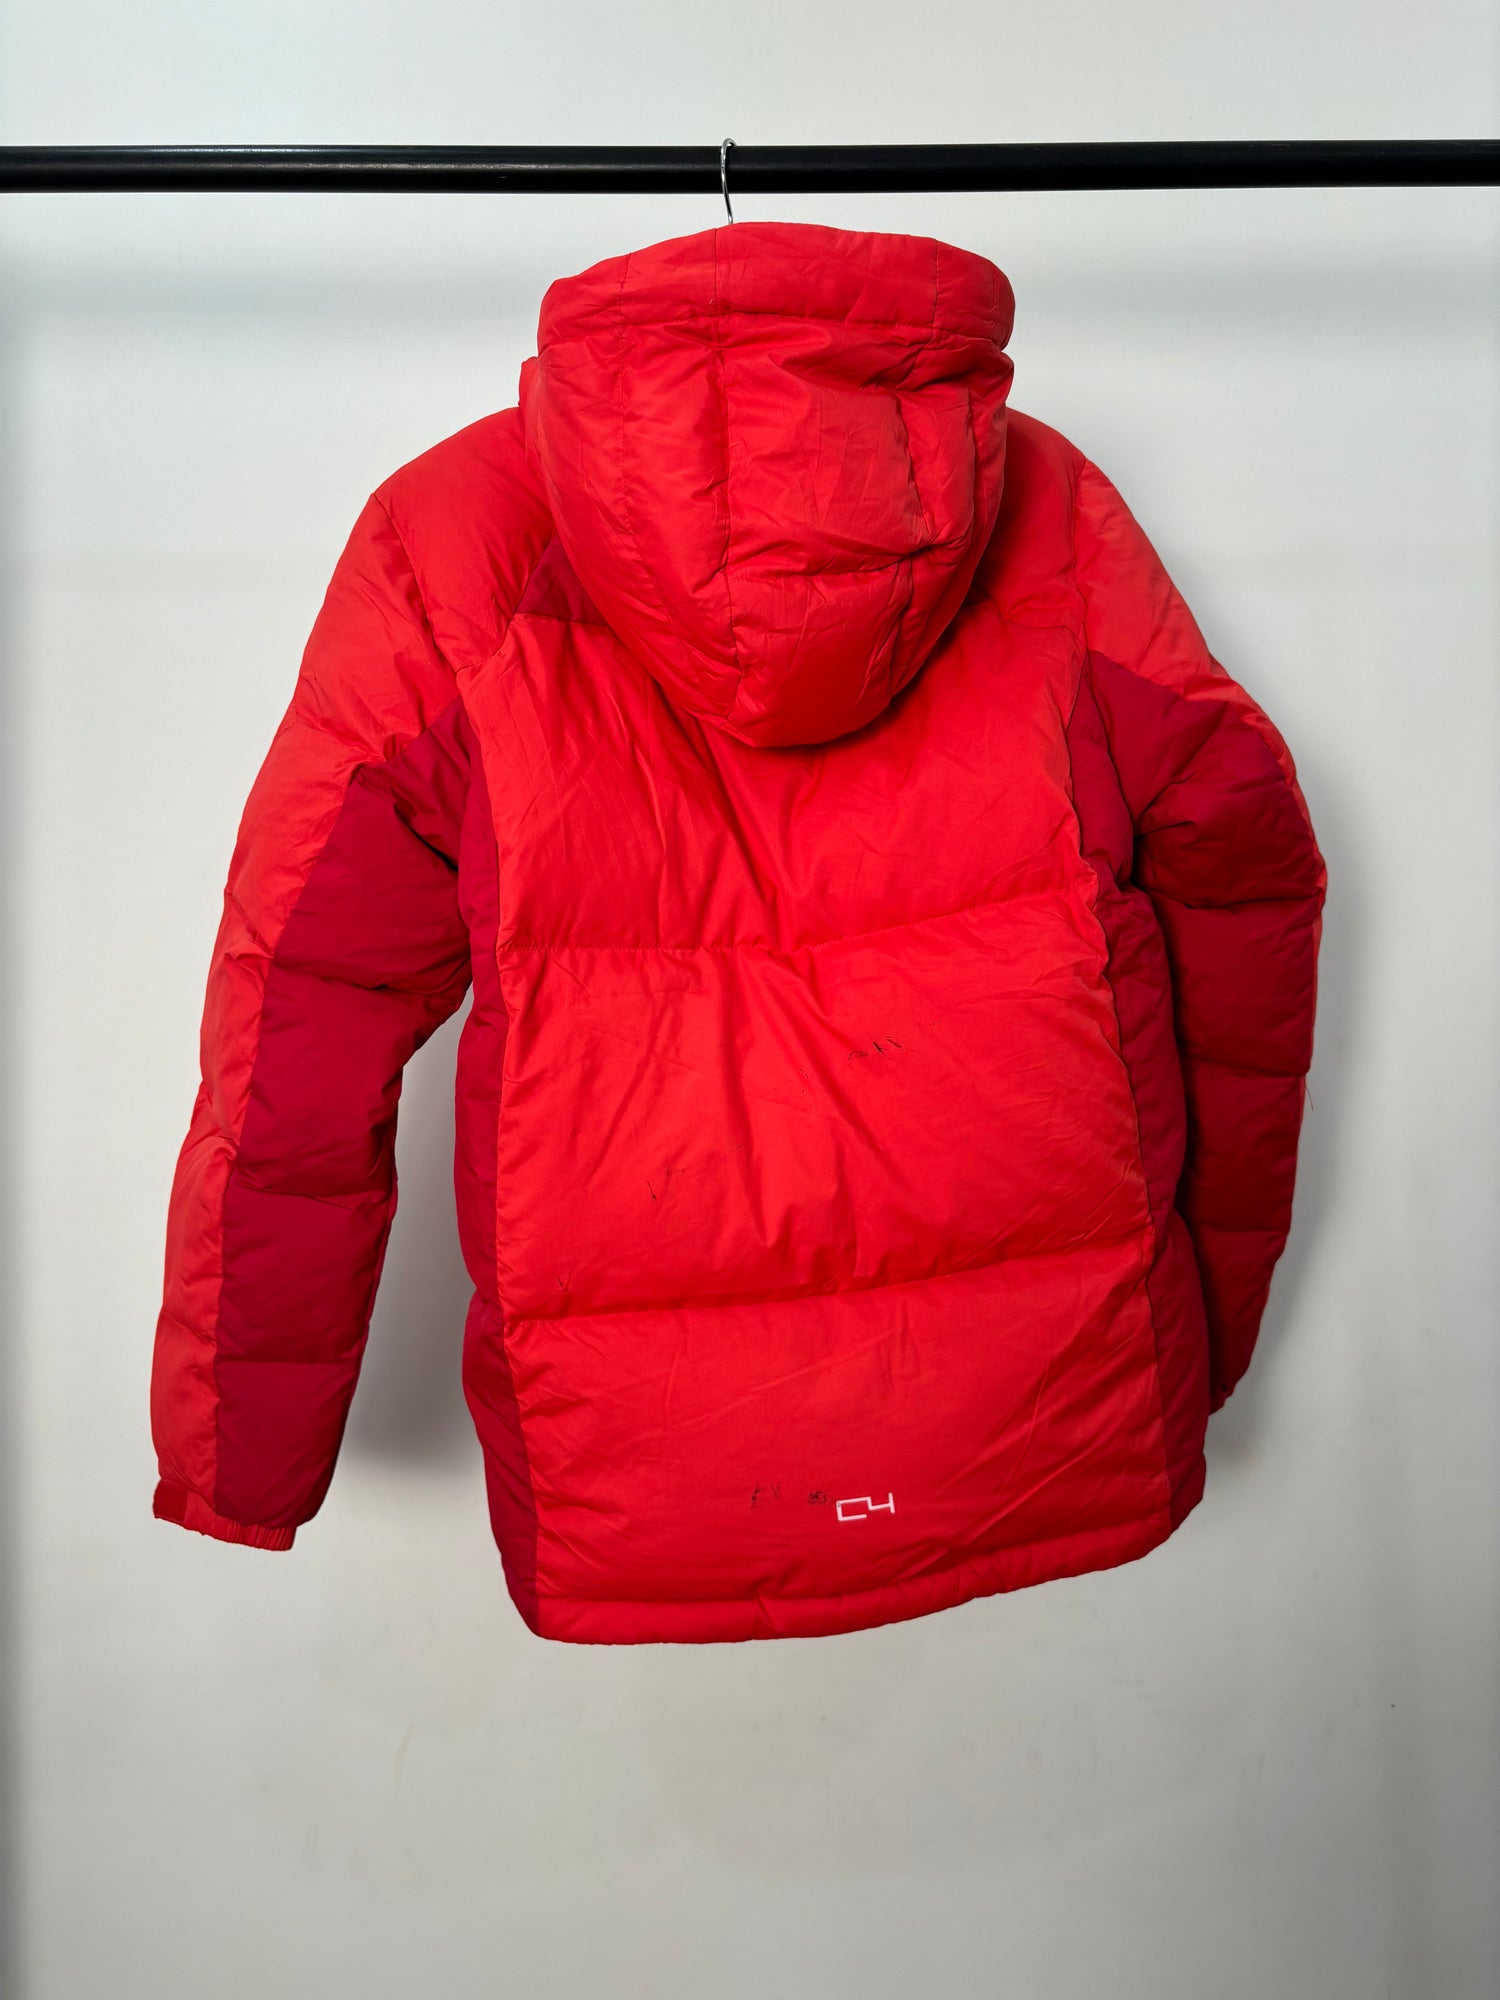 Kappa Red Puffer Jacket